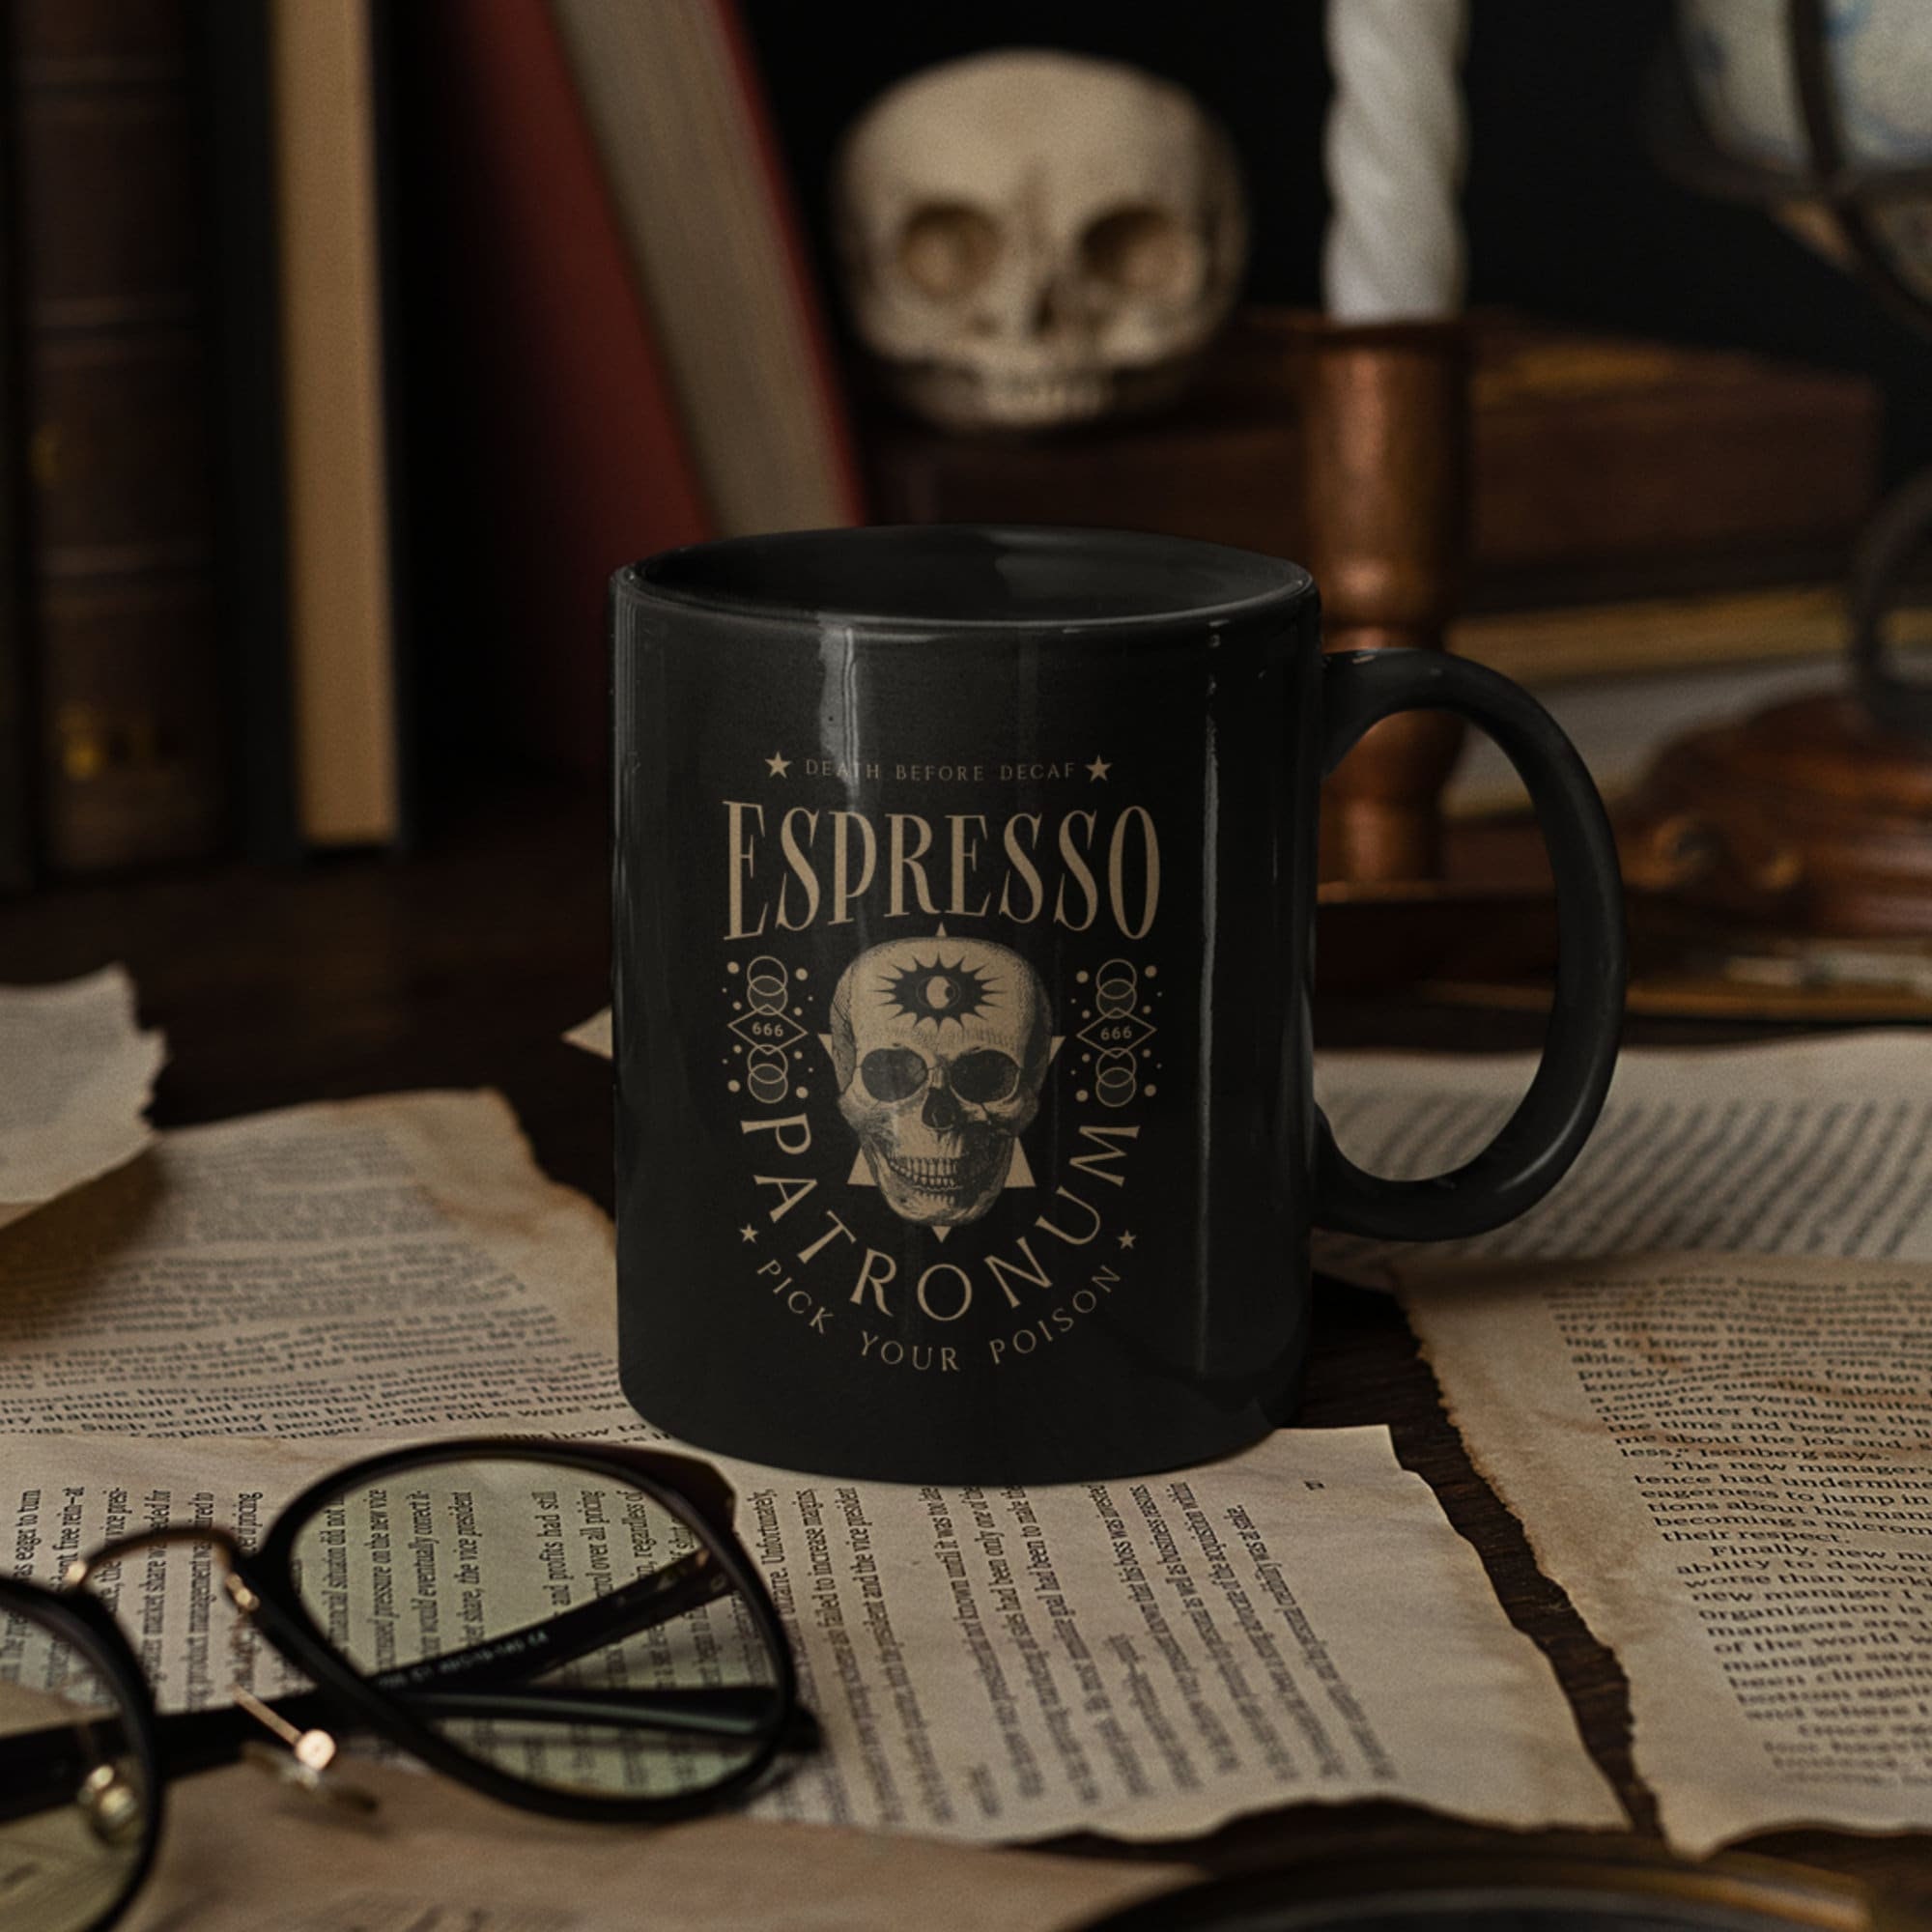 Espresso Patronum - Wizard Funny Coffee Mug for Sale by Fenay Designs